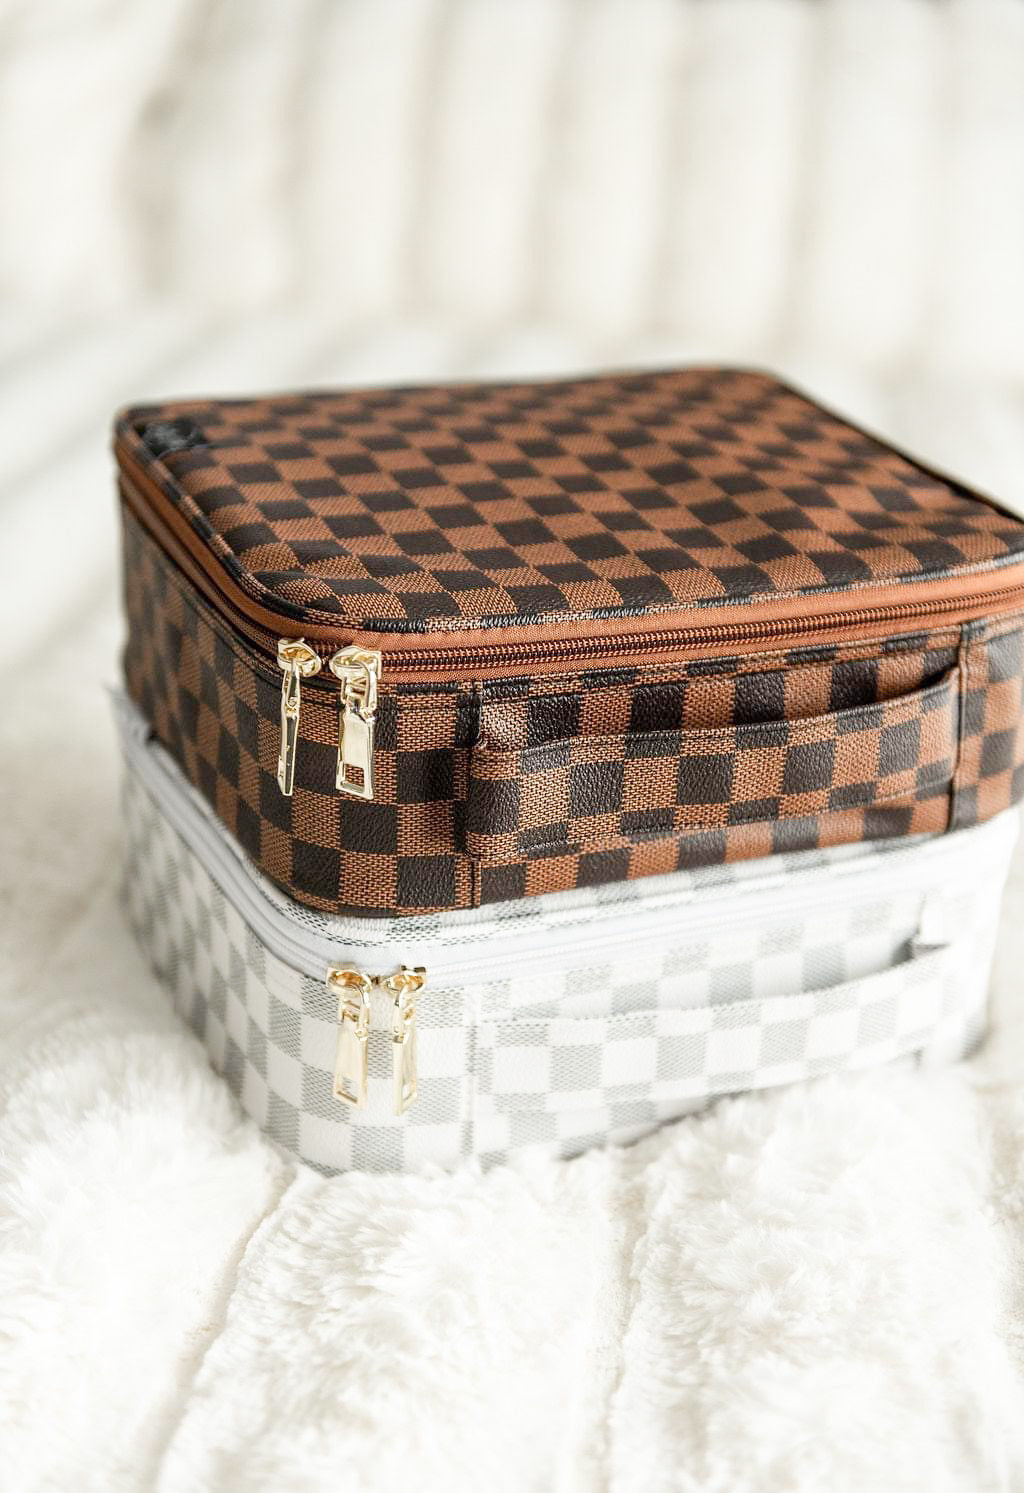 Knit Checkered Makeup Bag – The North Nash Boutique